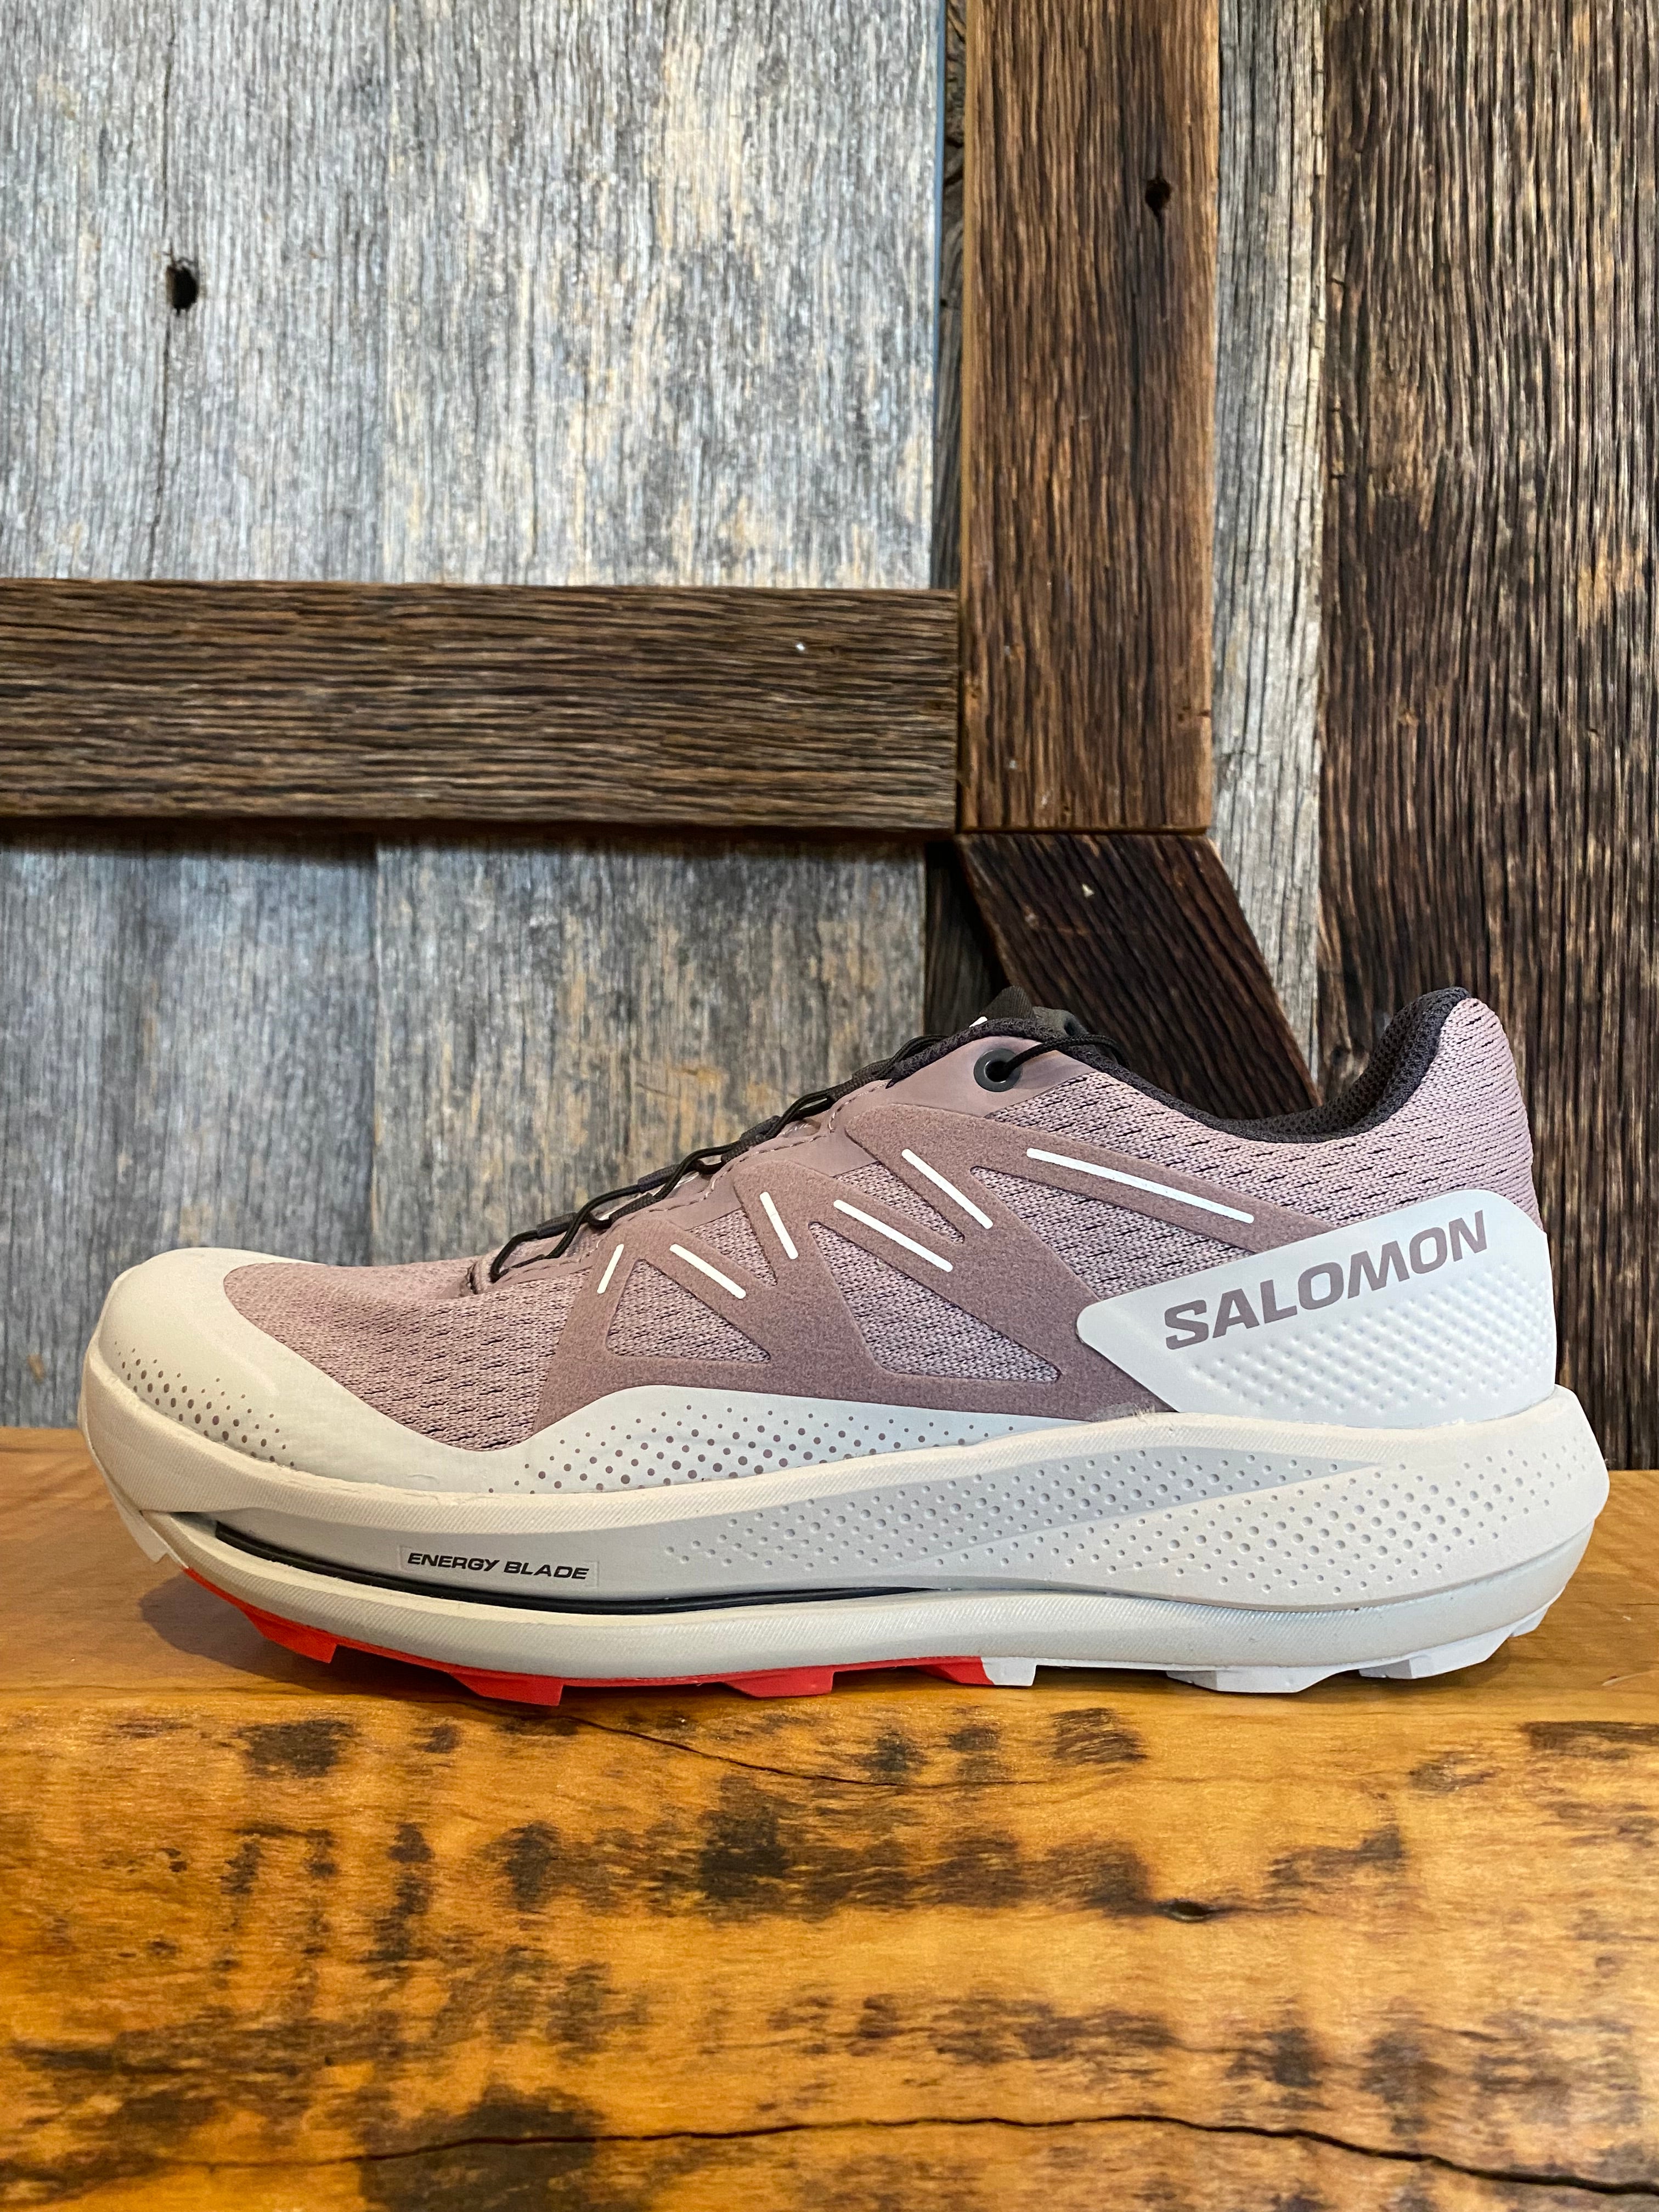 Salomon – The Trail Shop